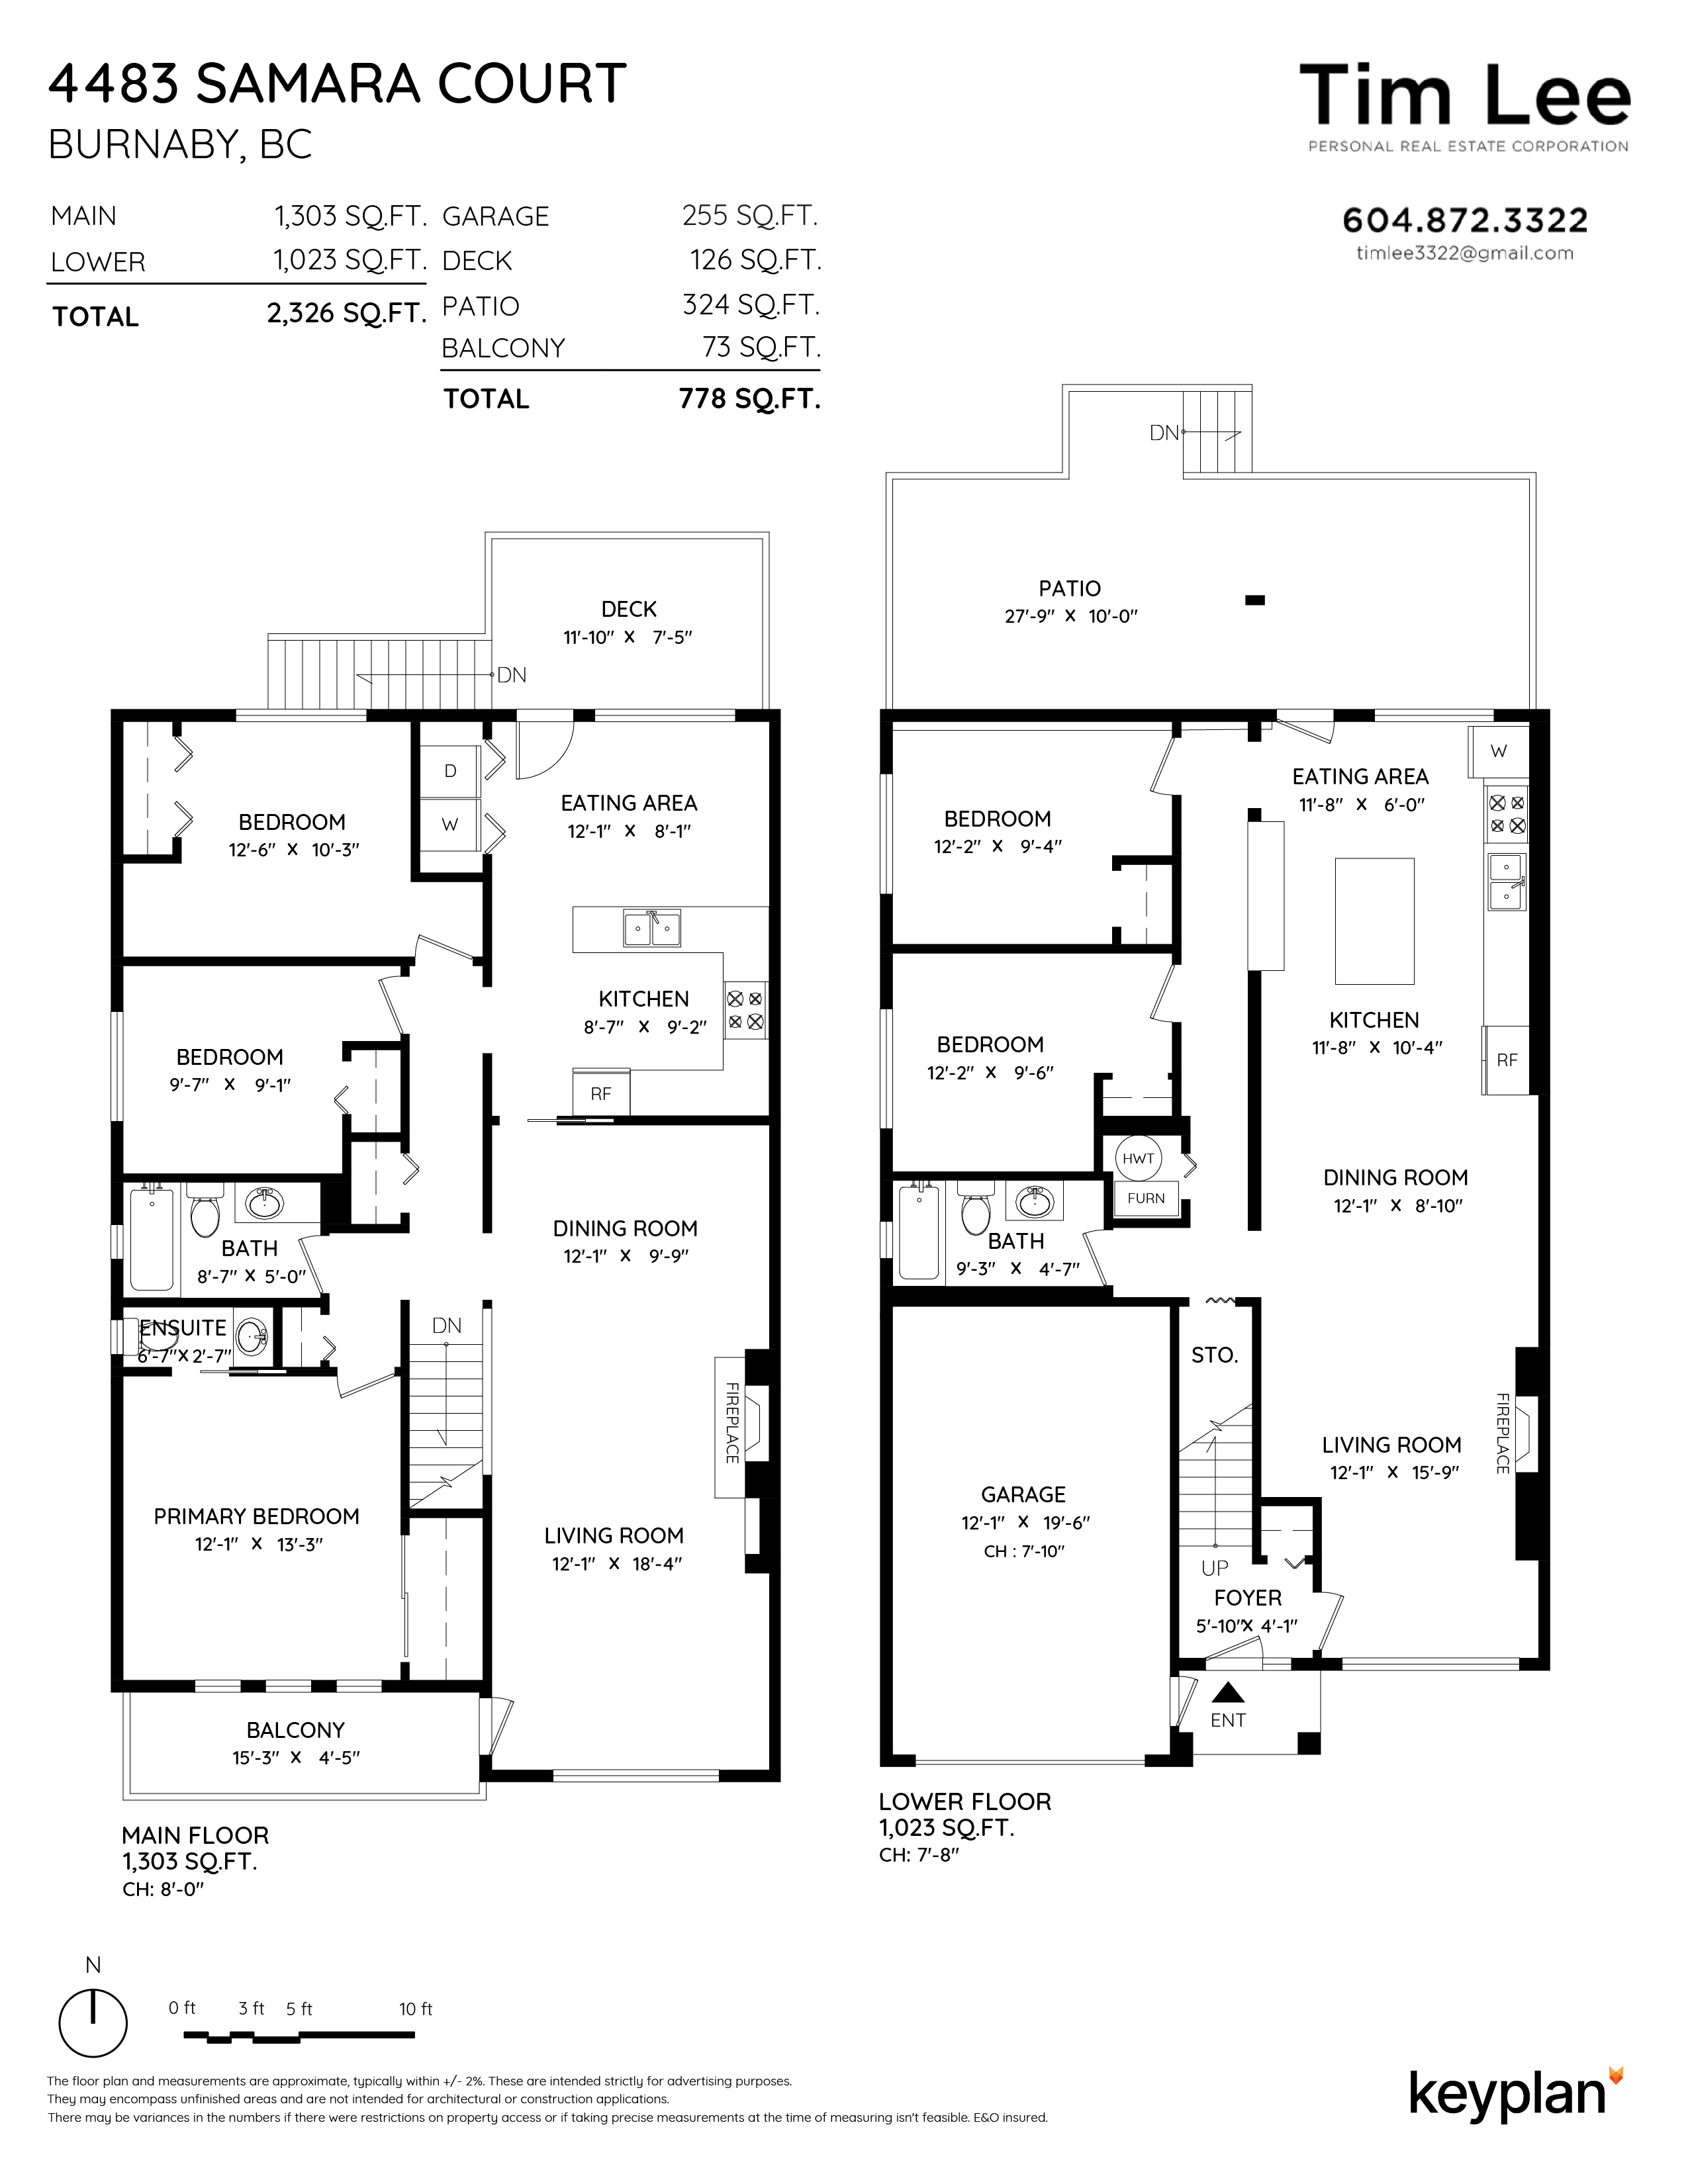 Tim Lee - 4483 Samara Court, Burnaby, BC, Canada | Floor Plan 1